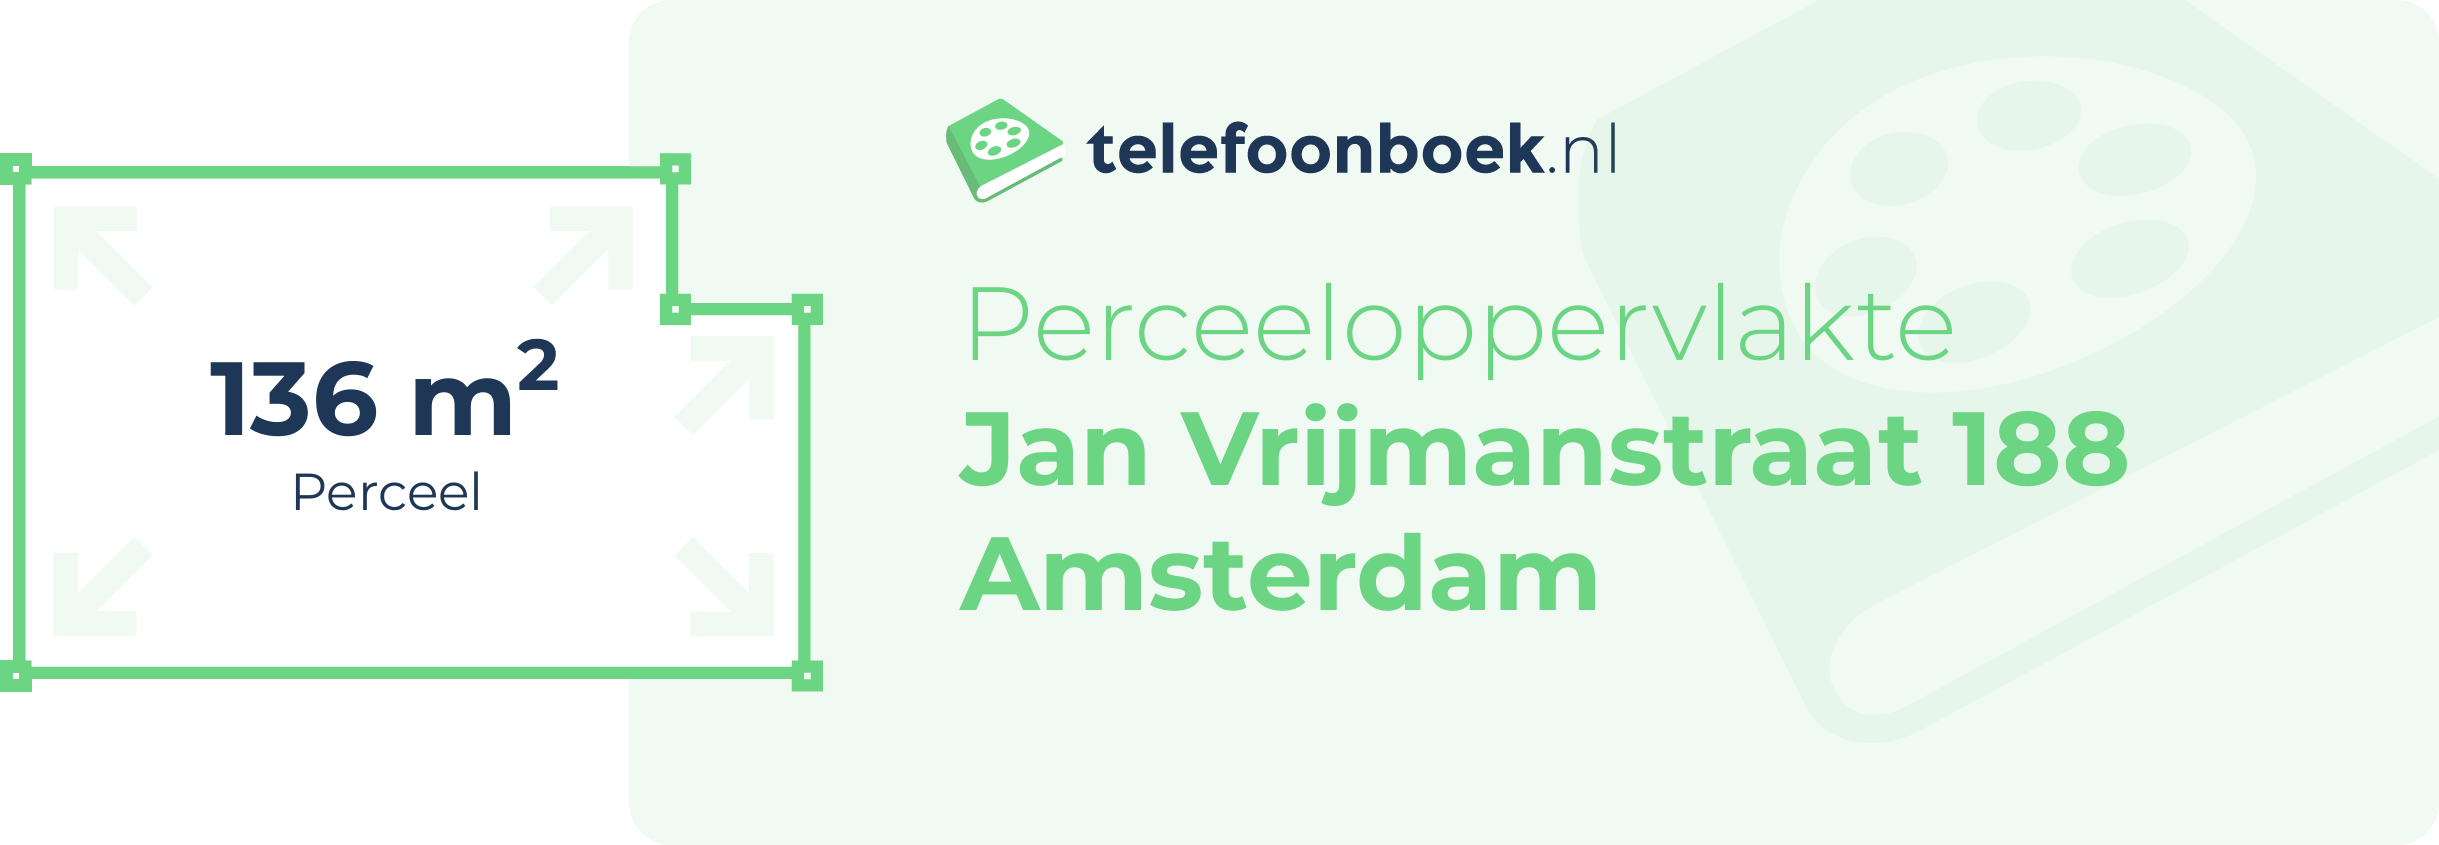 Perceeloppervlakte Jan Vrijmanstraat 188 Amsterdam